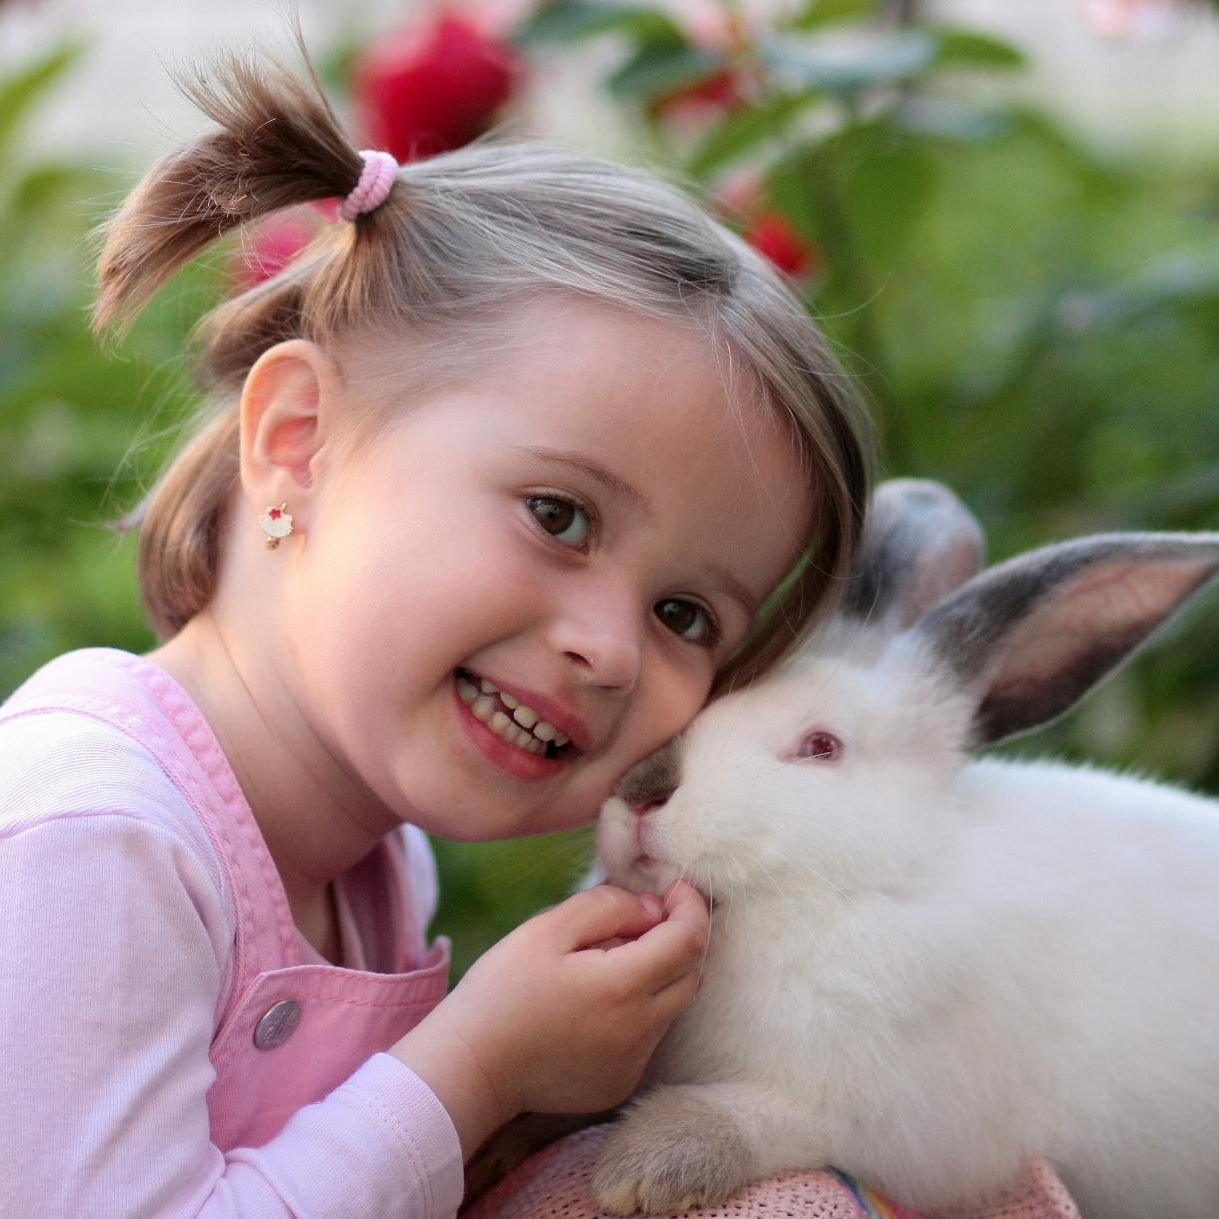 Child petting a rabbit